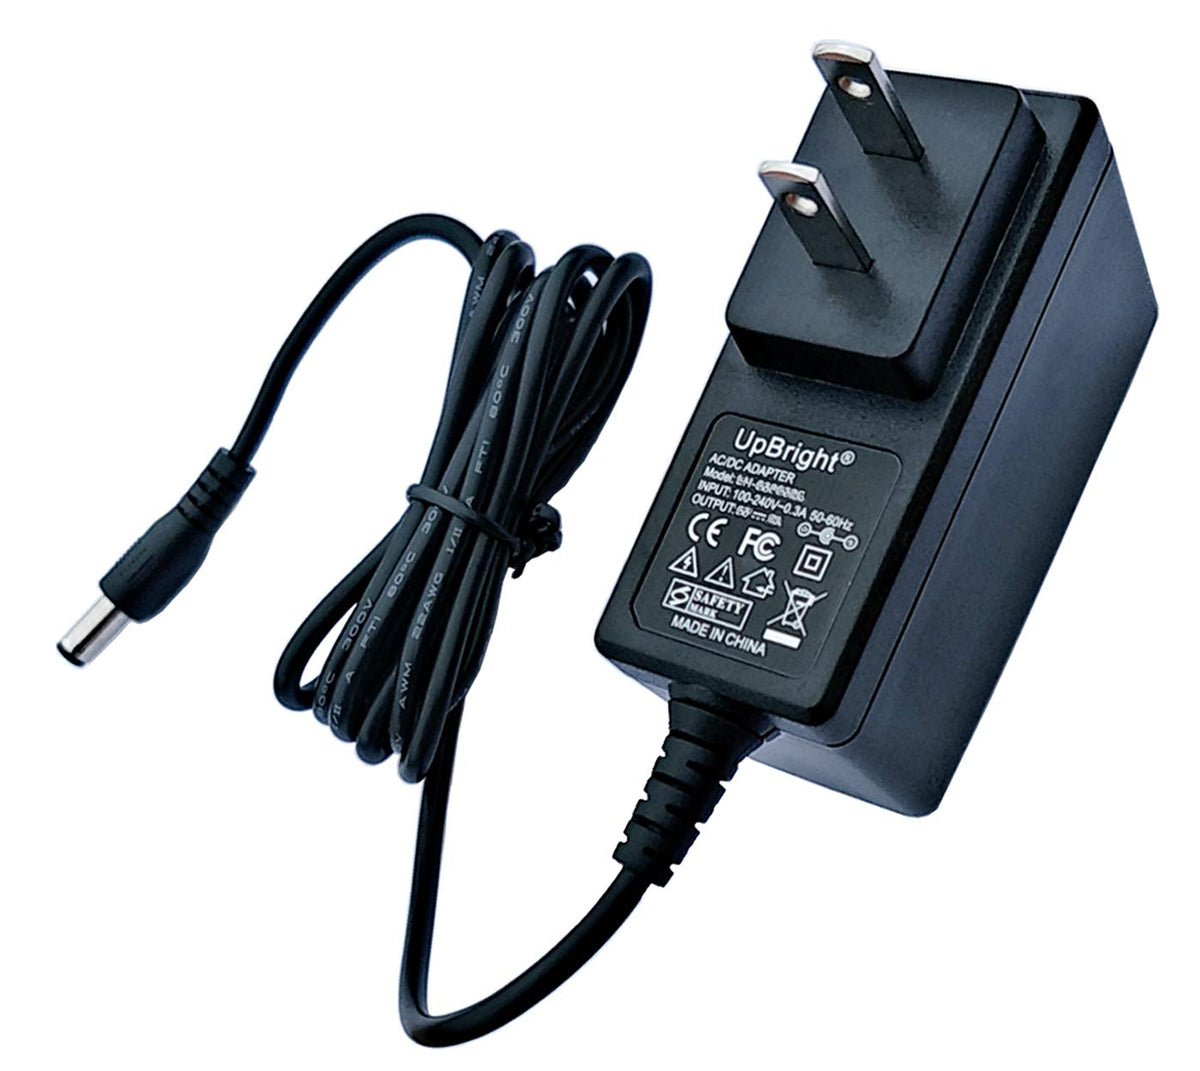 UpBright 12V AC/DC Adapter Compatible with Bose SoundLink Sound Link Mini Bluetooth Speaker PSA10F-120C 357720-0021 PSA10F-120 C 359037-1300 12.0V 833mA 12VDC 0.833A 1.5A 2A DC12V Power Supply Charger